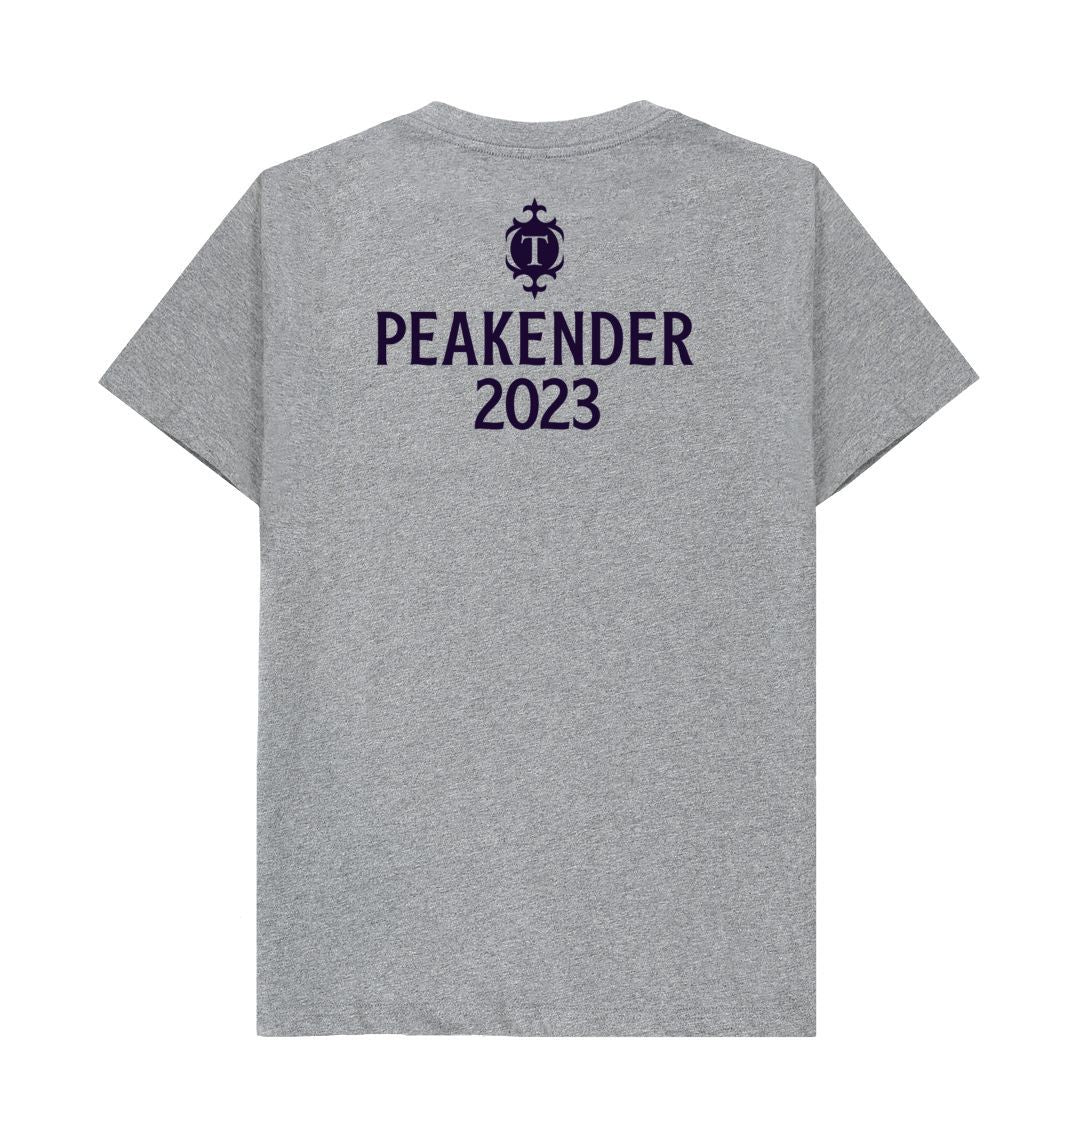 Peakender 2023 Tee Printed T-shirt Thornbridge